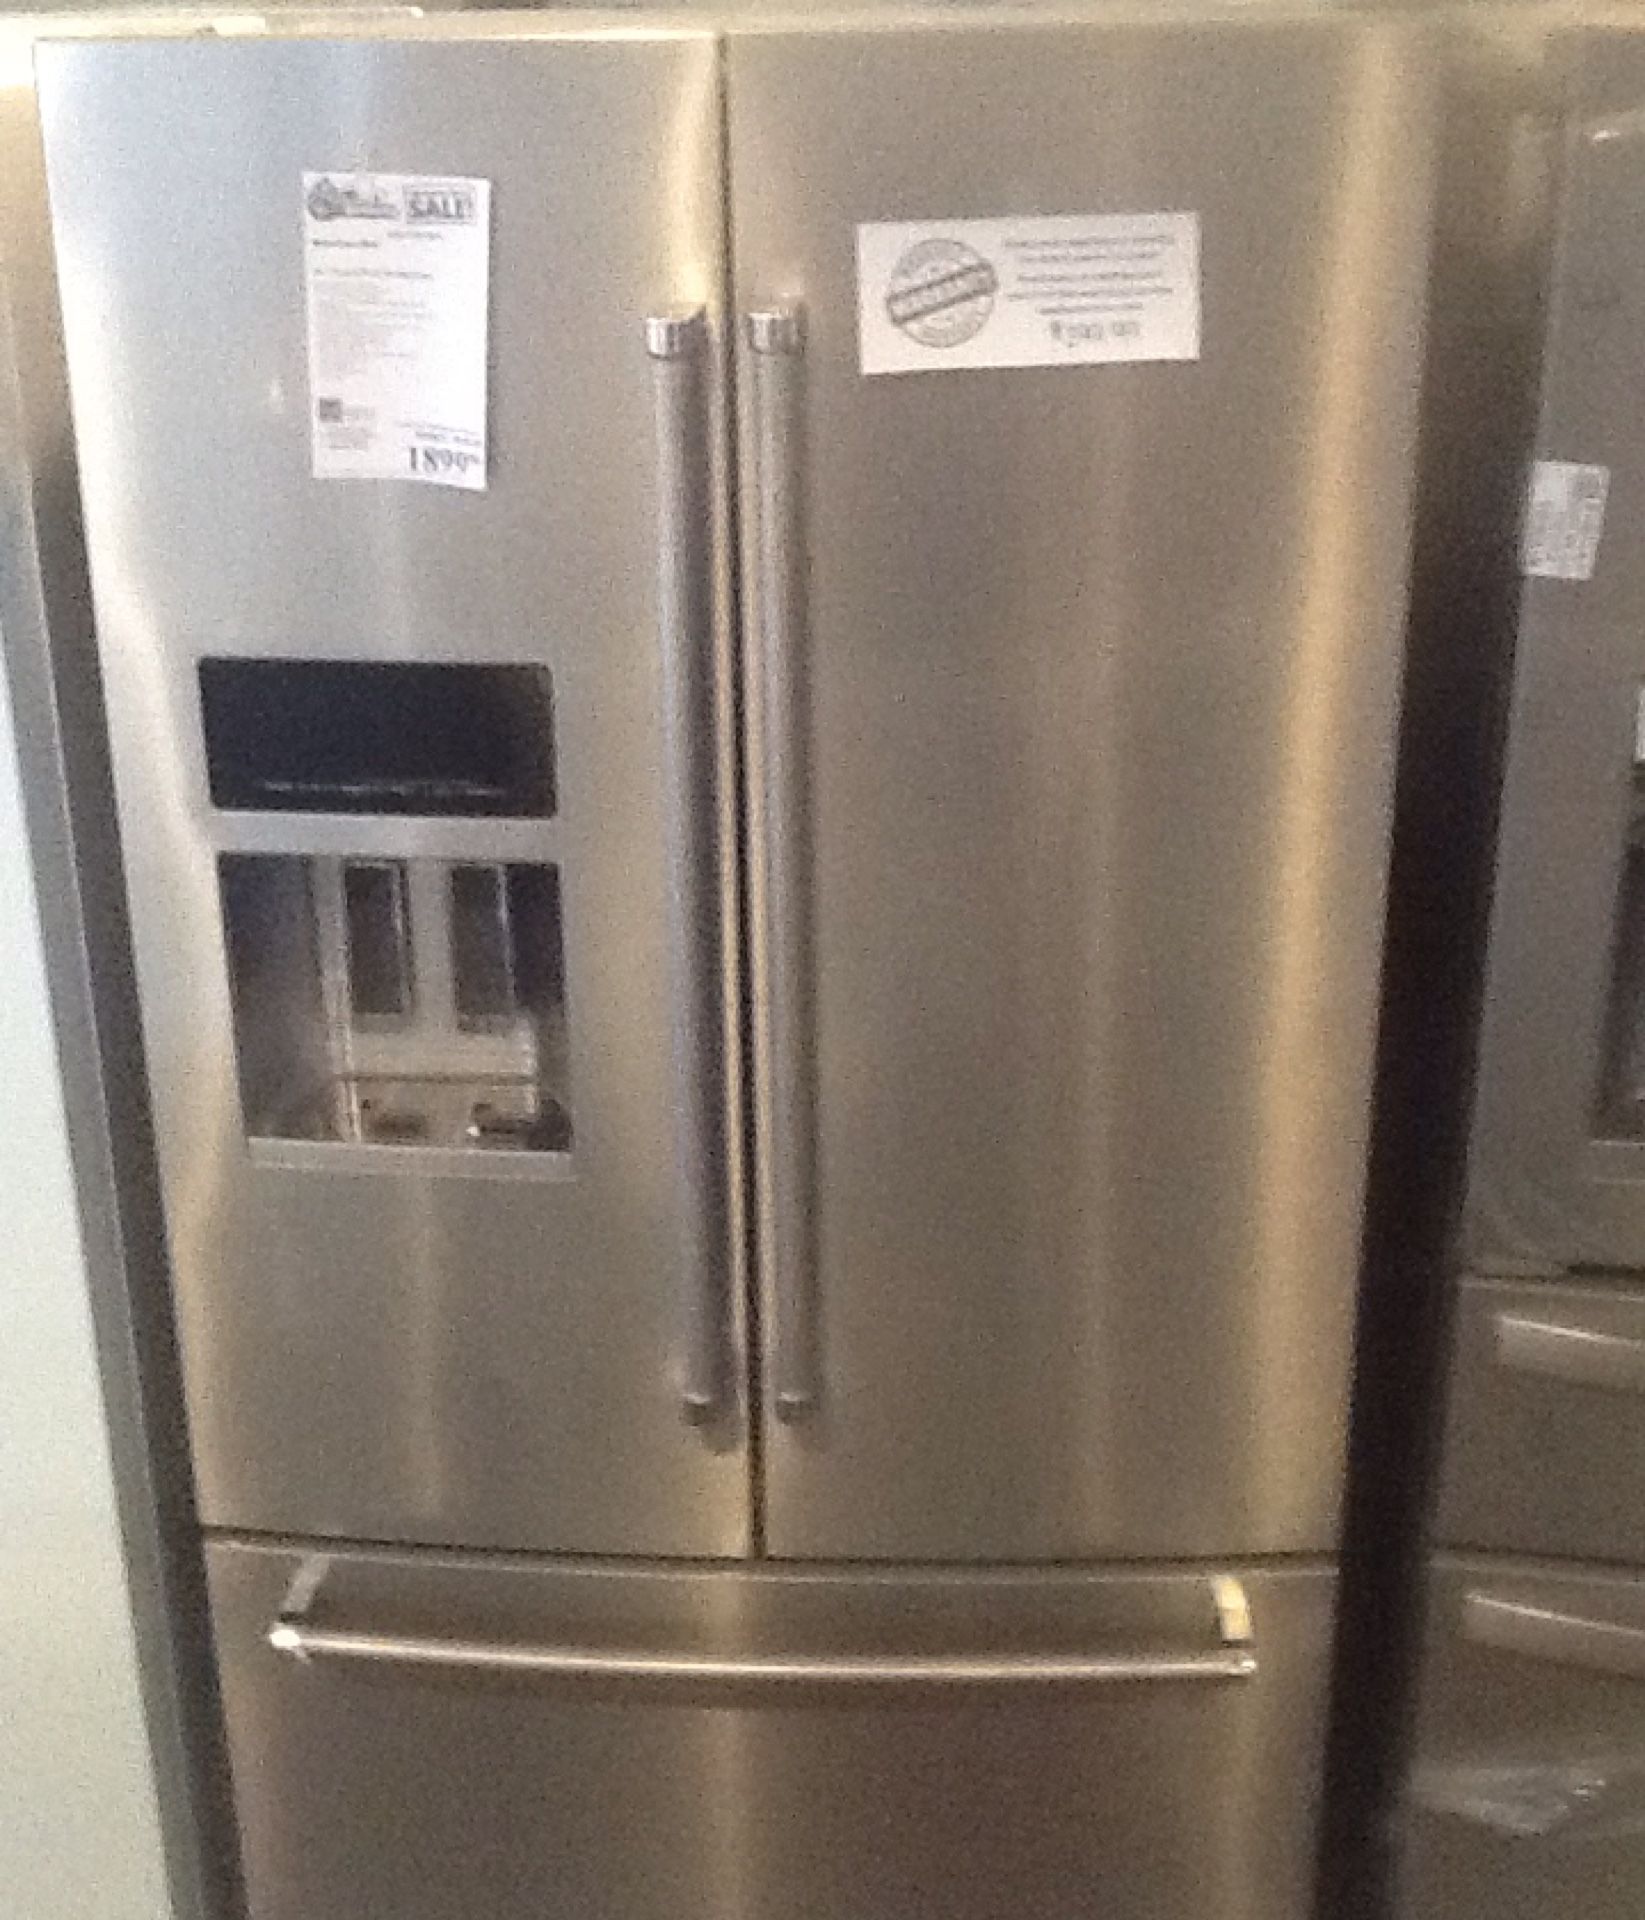 New open box kitchen aid refrigerator KRFF507HPS 26.8 cu ft